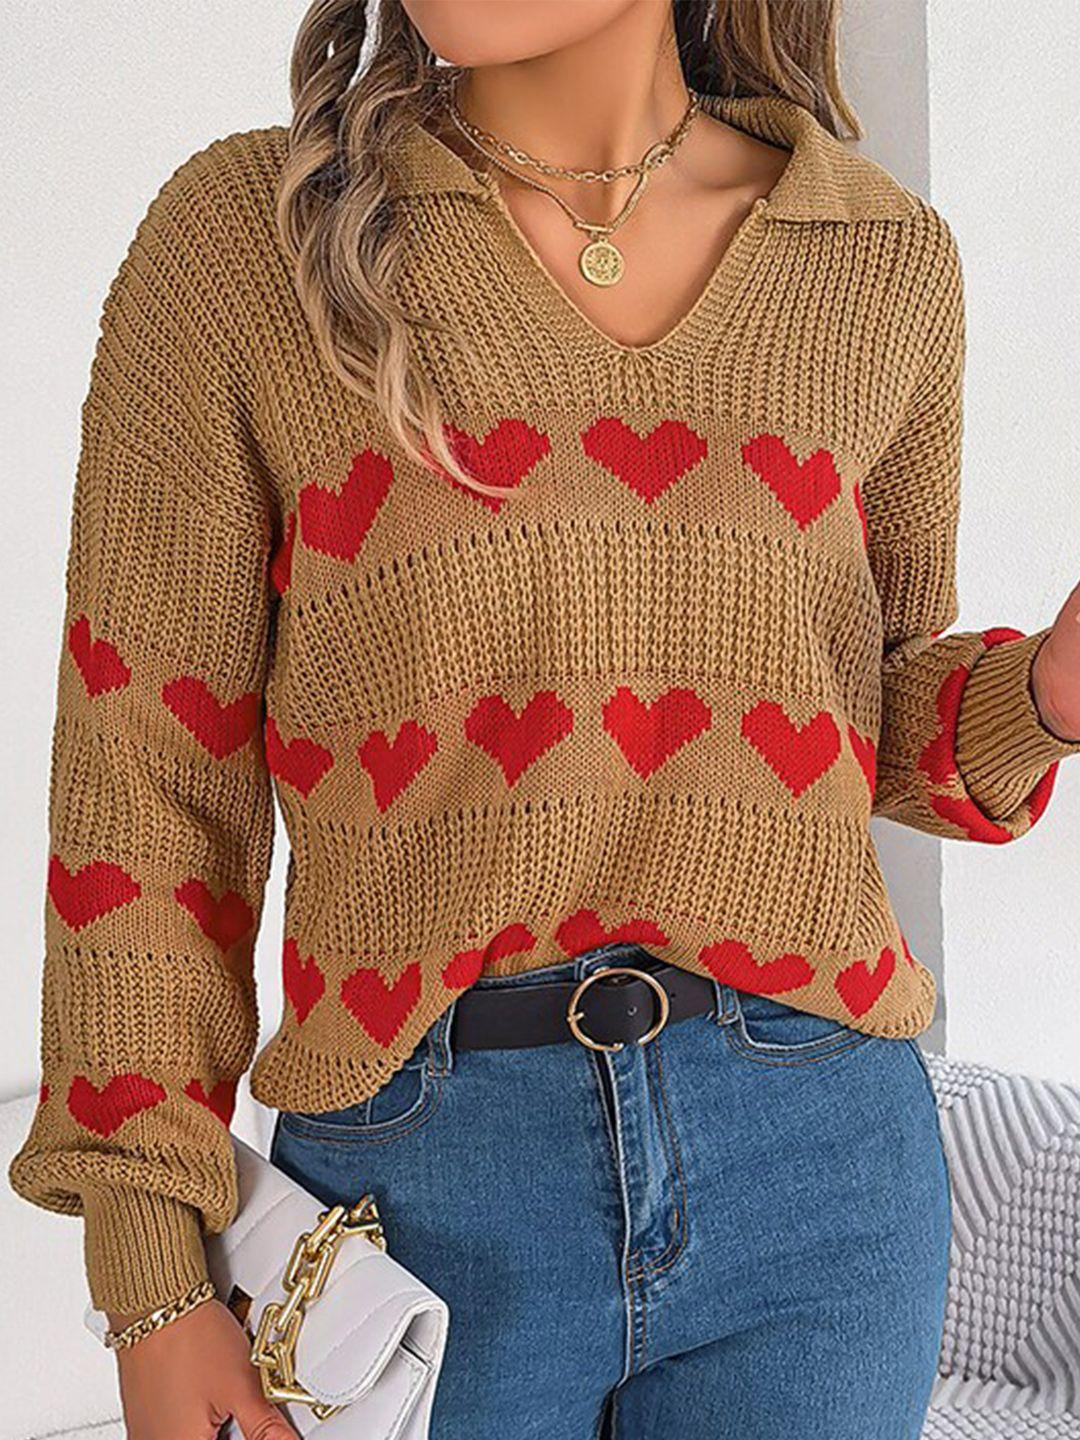 stylecast women khaki printed pullover